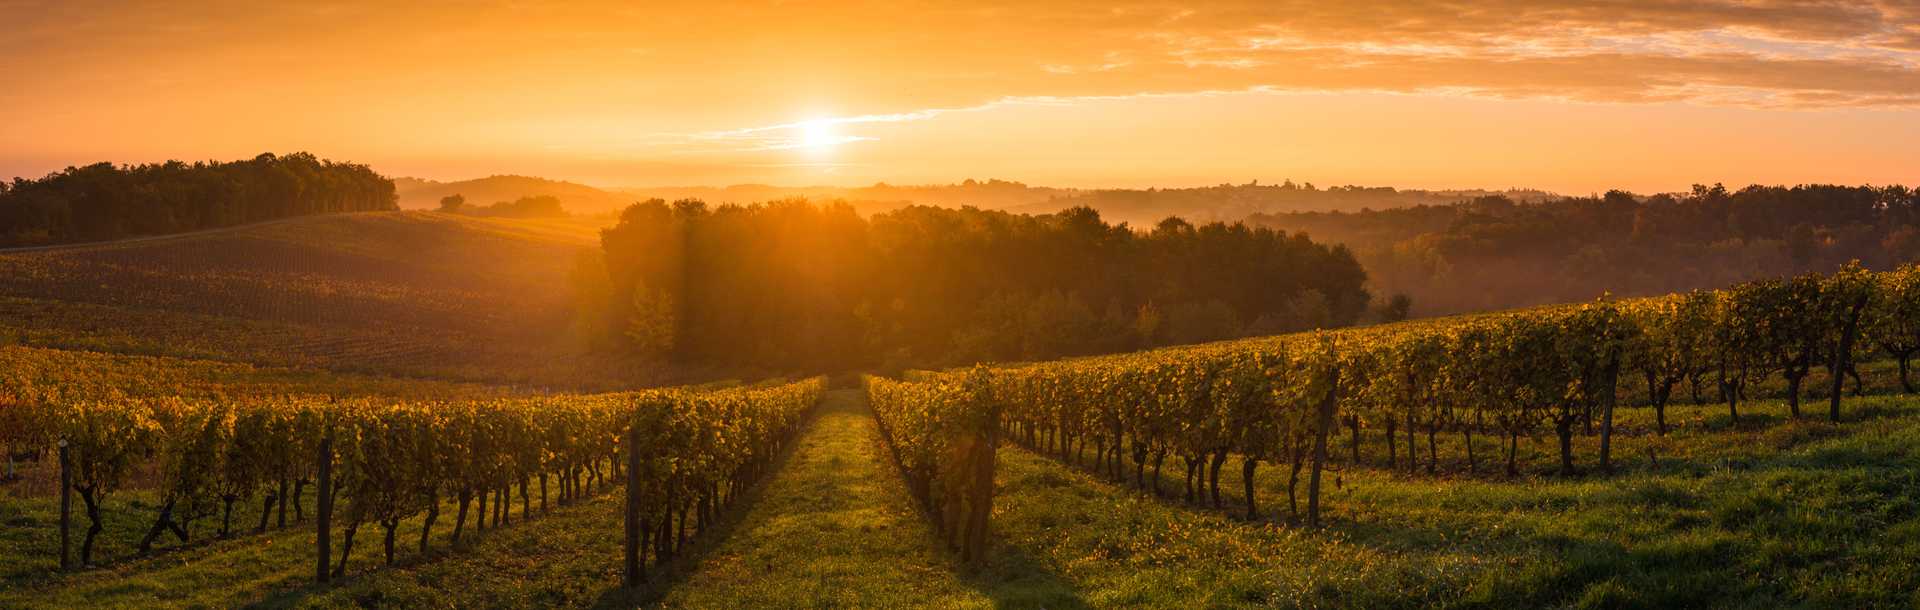 Vineyards at sunrise in Bordeaux, France